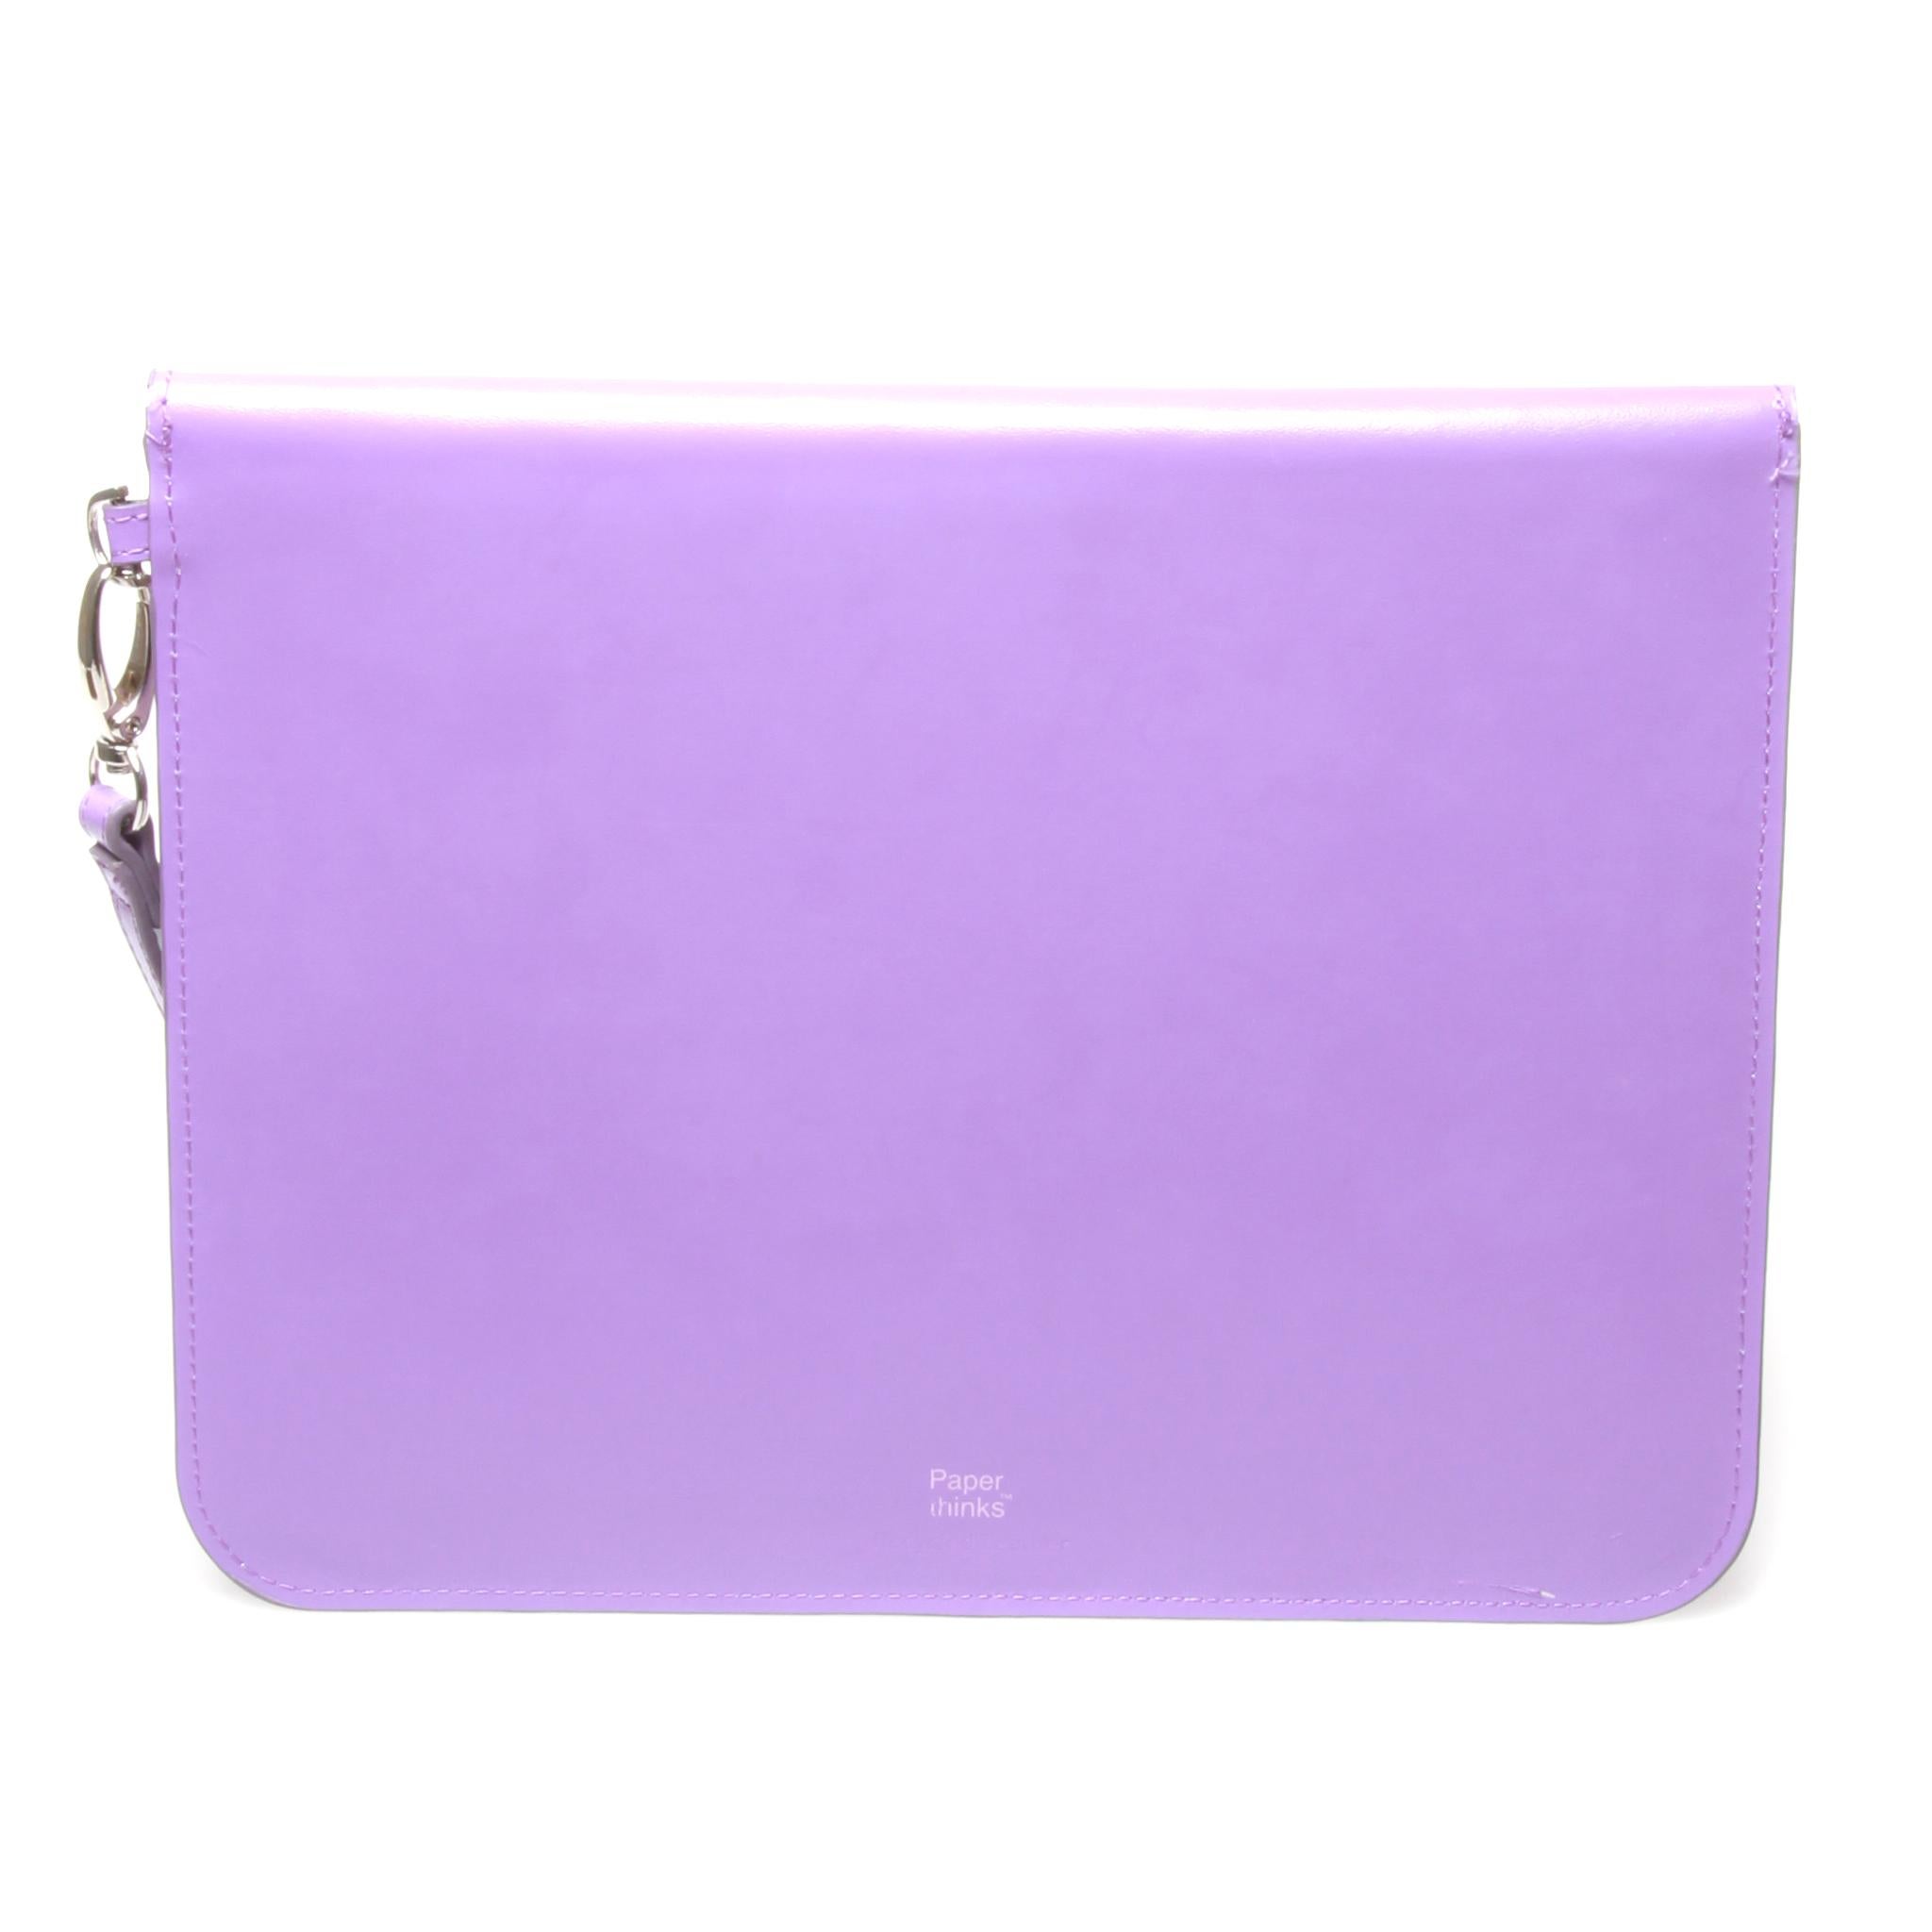 Purple Paper Thinks purple envelope clutch For Sale